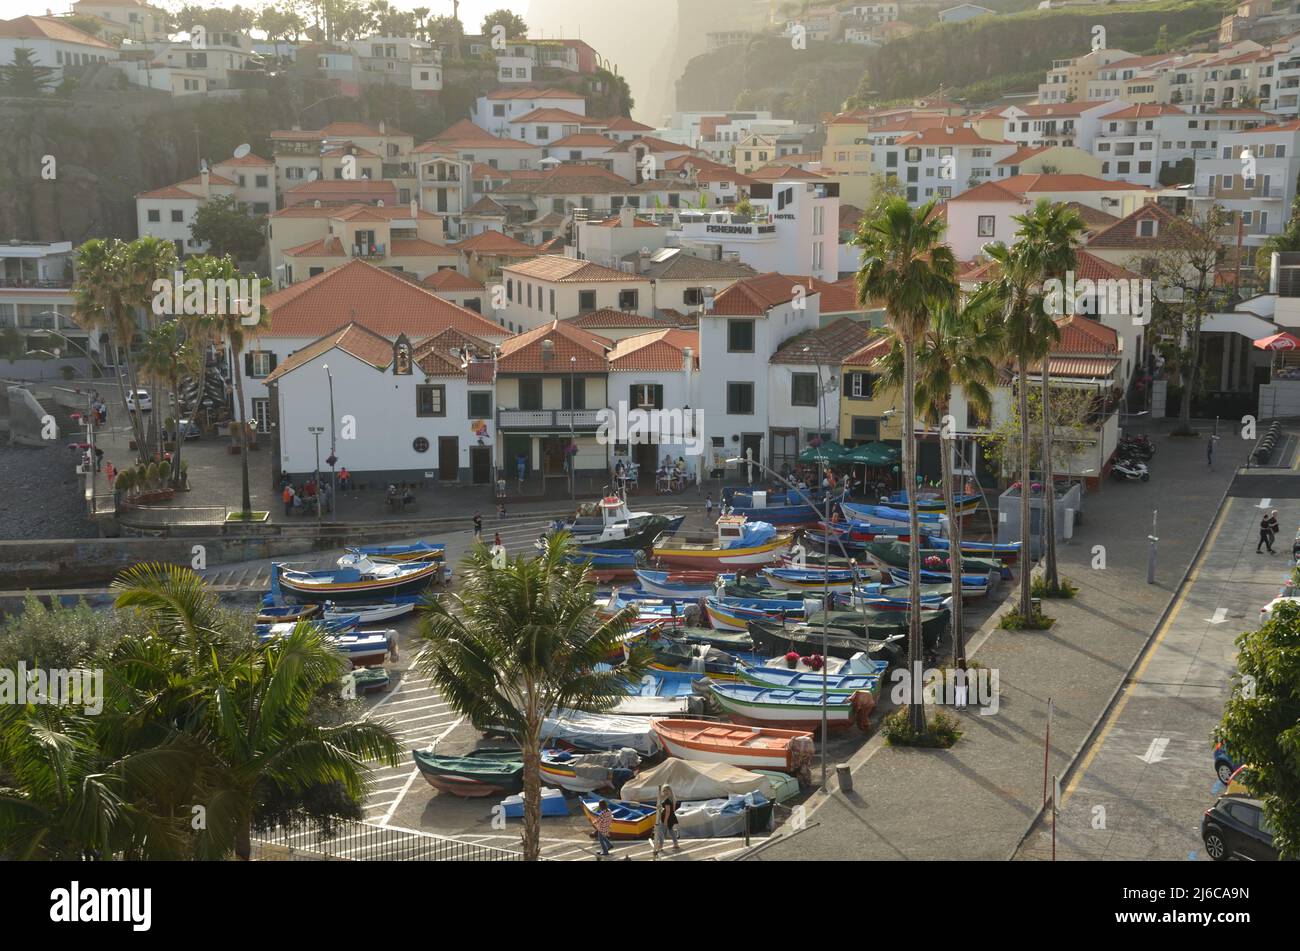 The fishing village of Camara de Lobos on the island of Madeira, Portugal Stock Photo